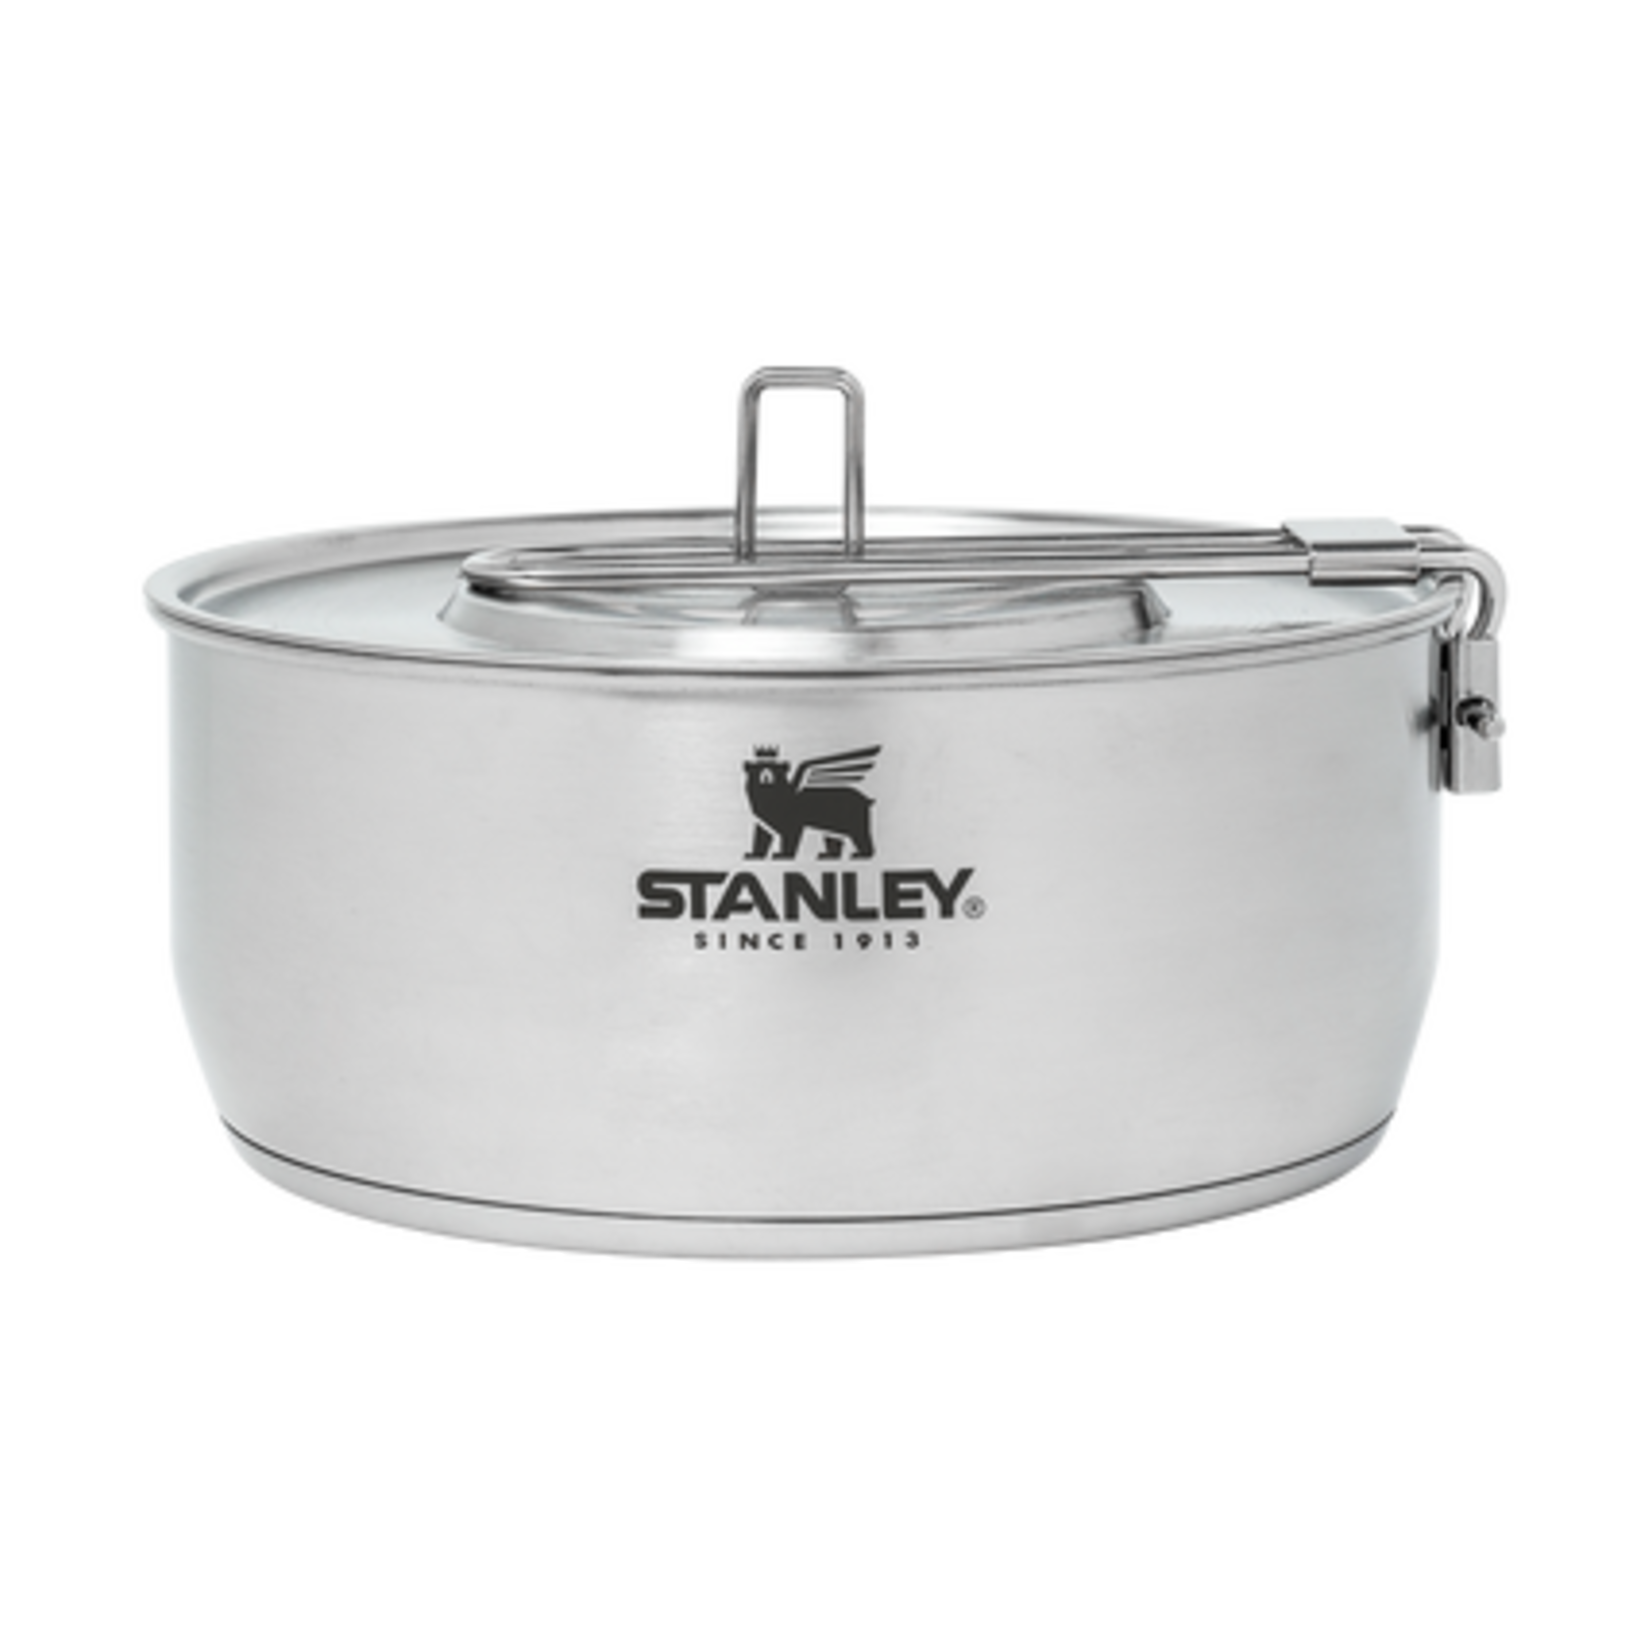 Stanley Adventure All-in-One Fry Pan Set